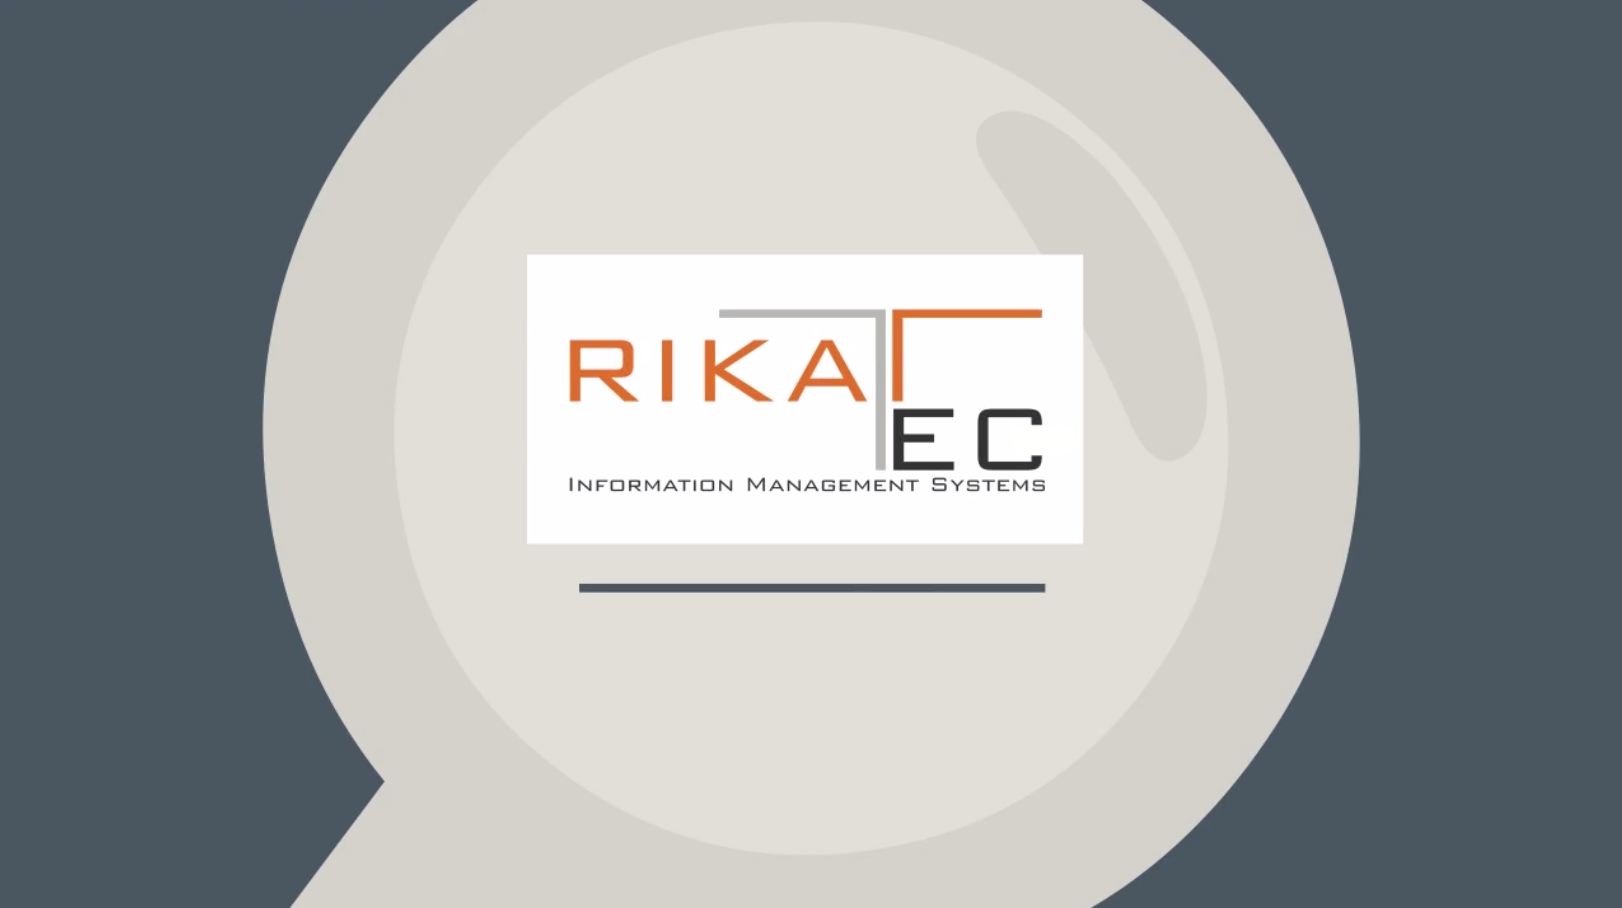 Rikatec Animation Marketing Video Example 1